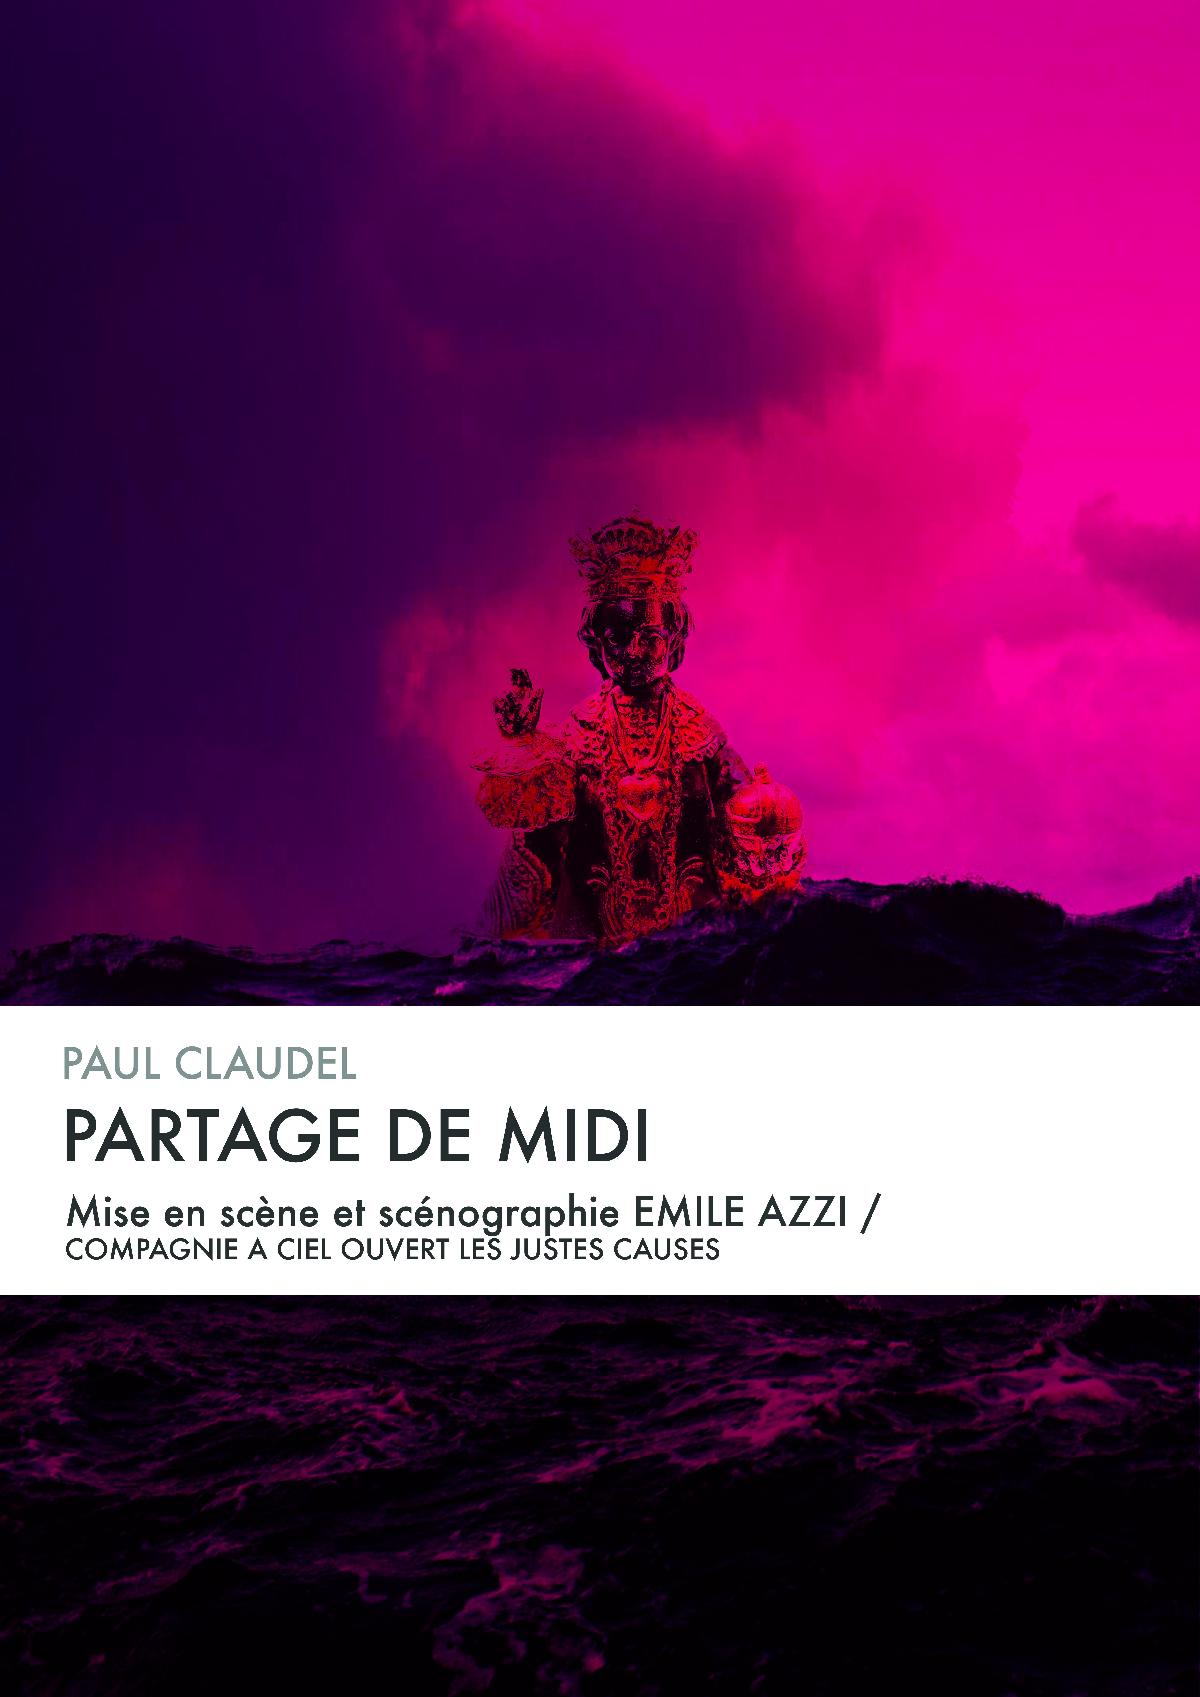 PARTAGE DE MIDI